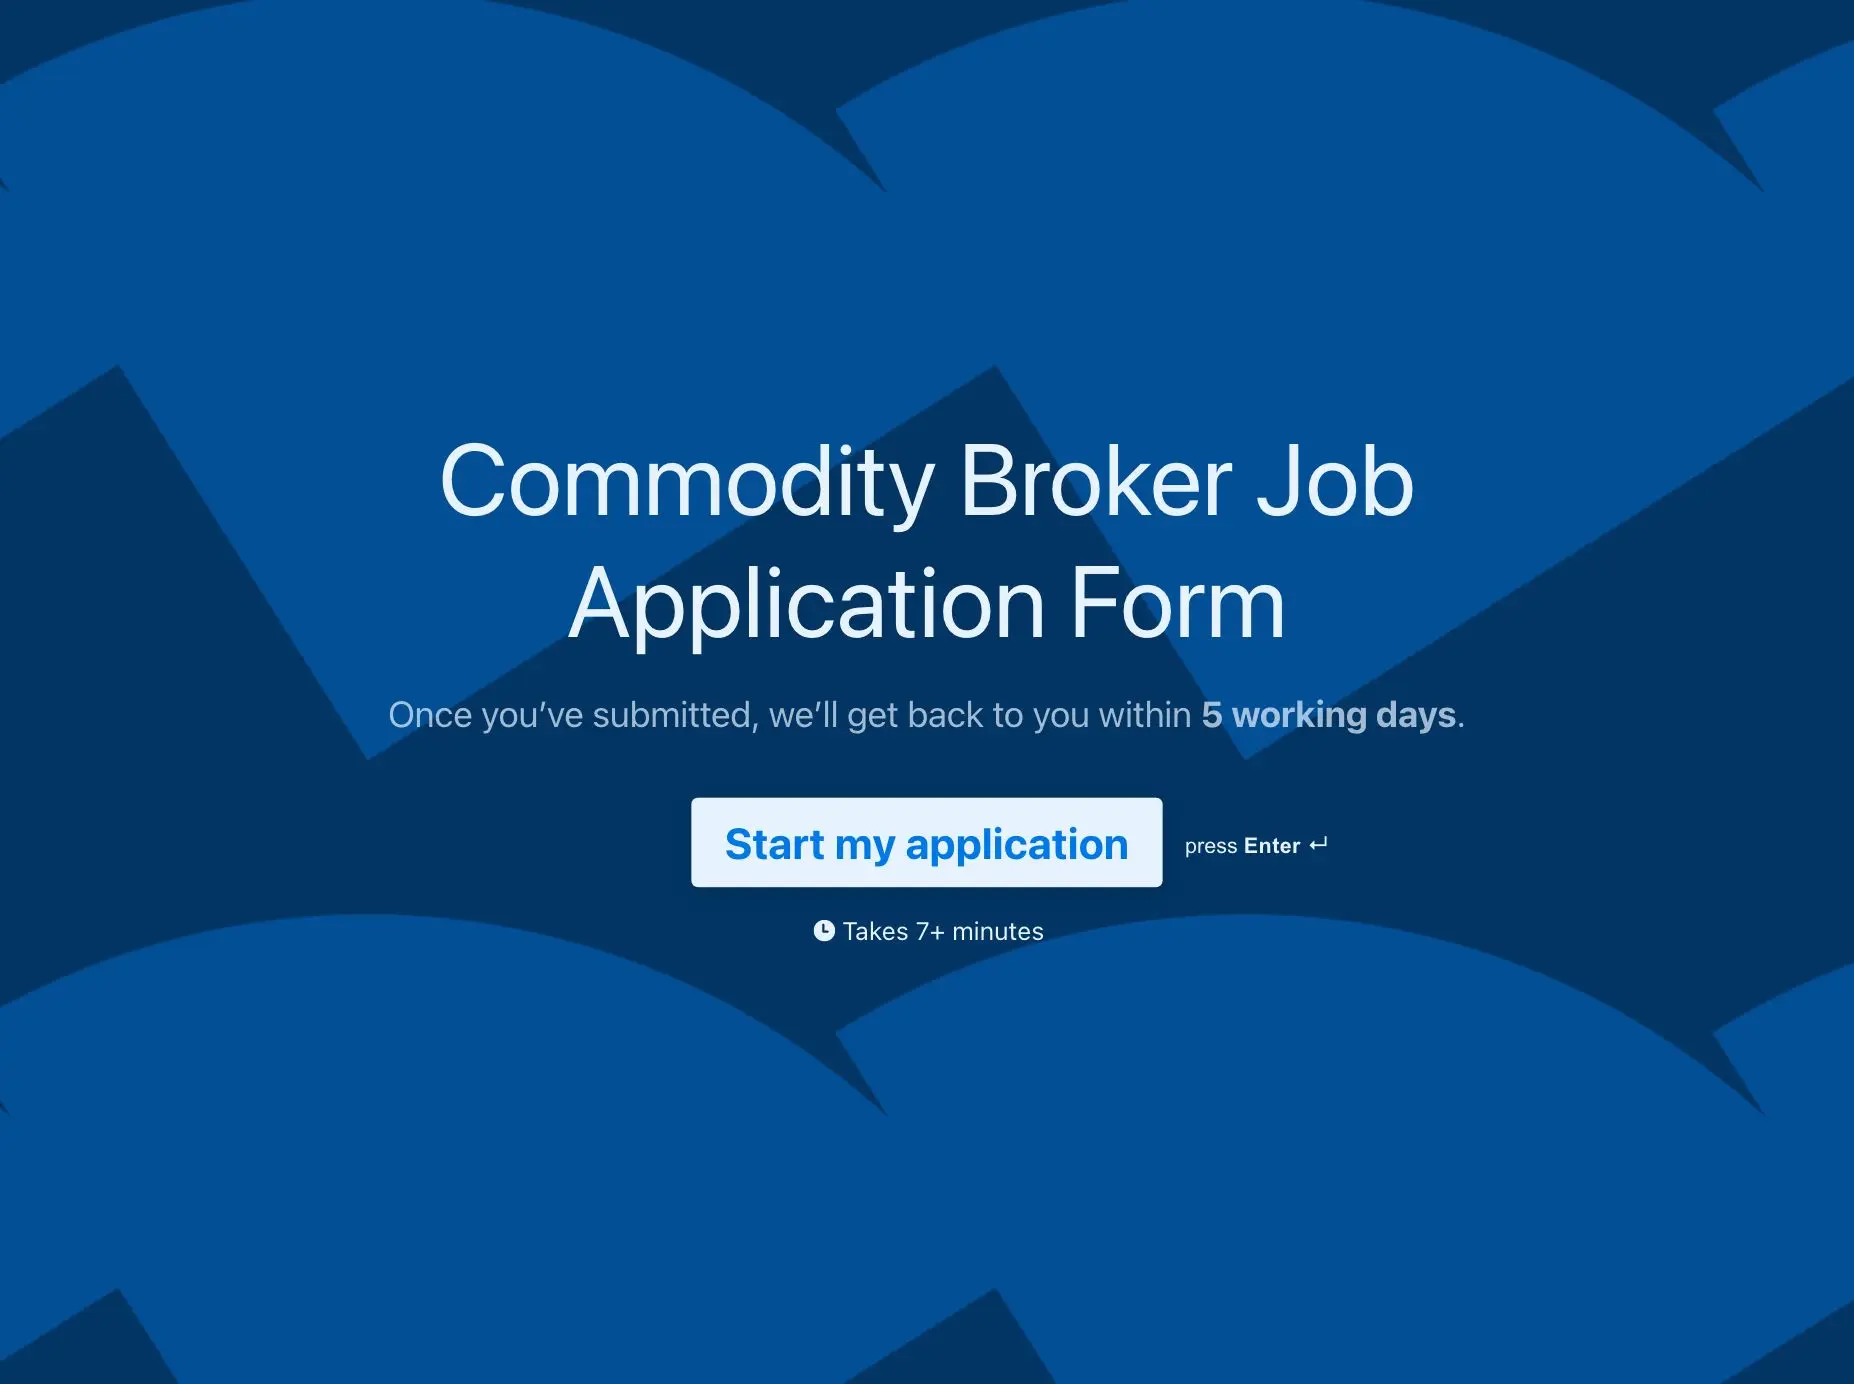 Commodity Broker Job Application Form Template Hero